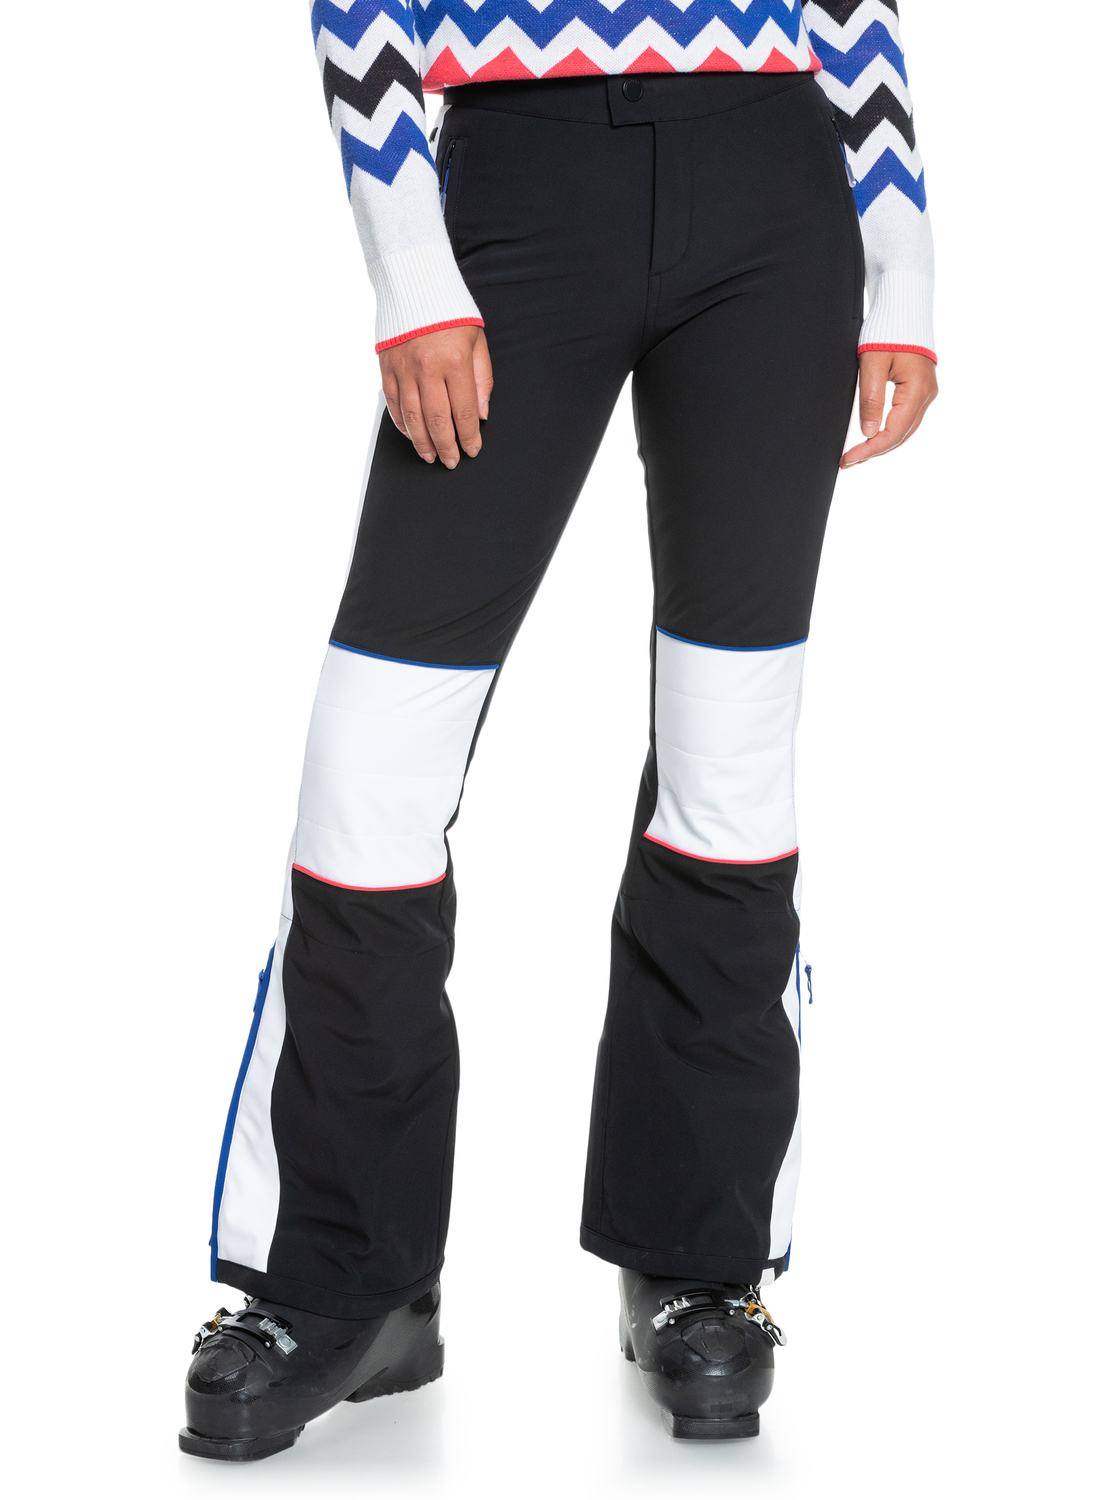 Спортивные брюки Roxy Ski Chic true black, M INT